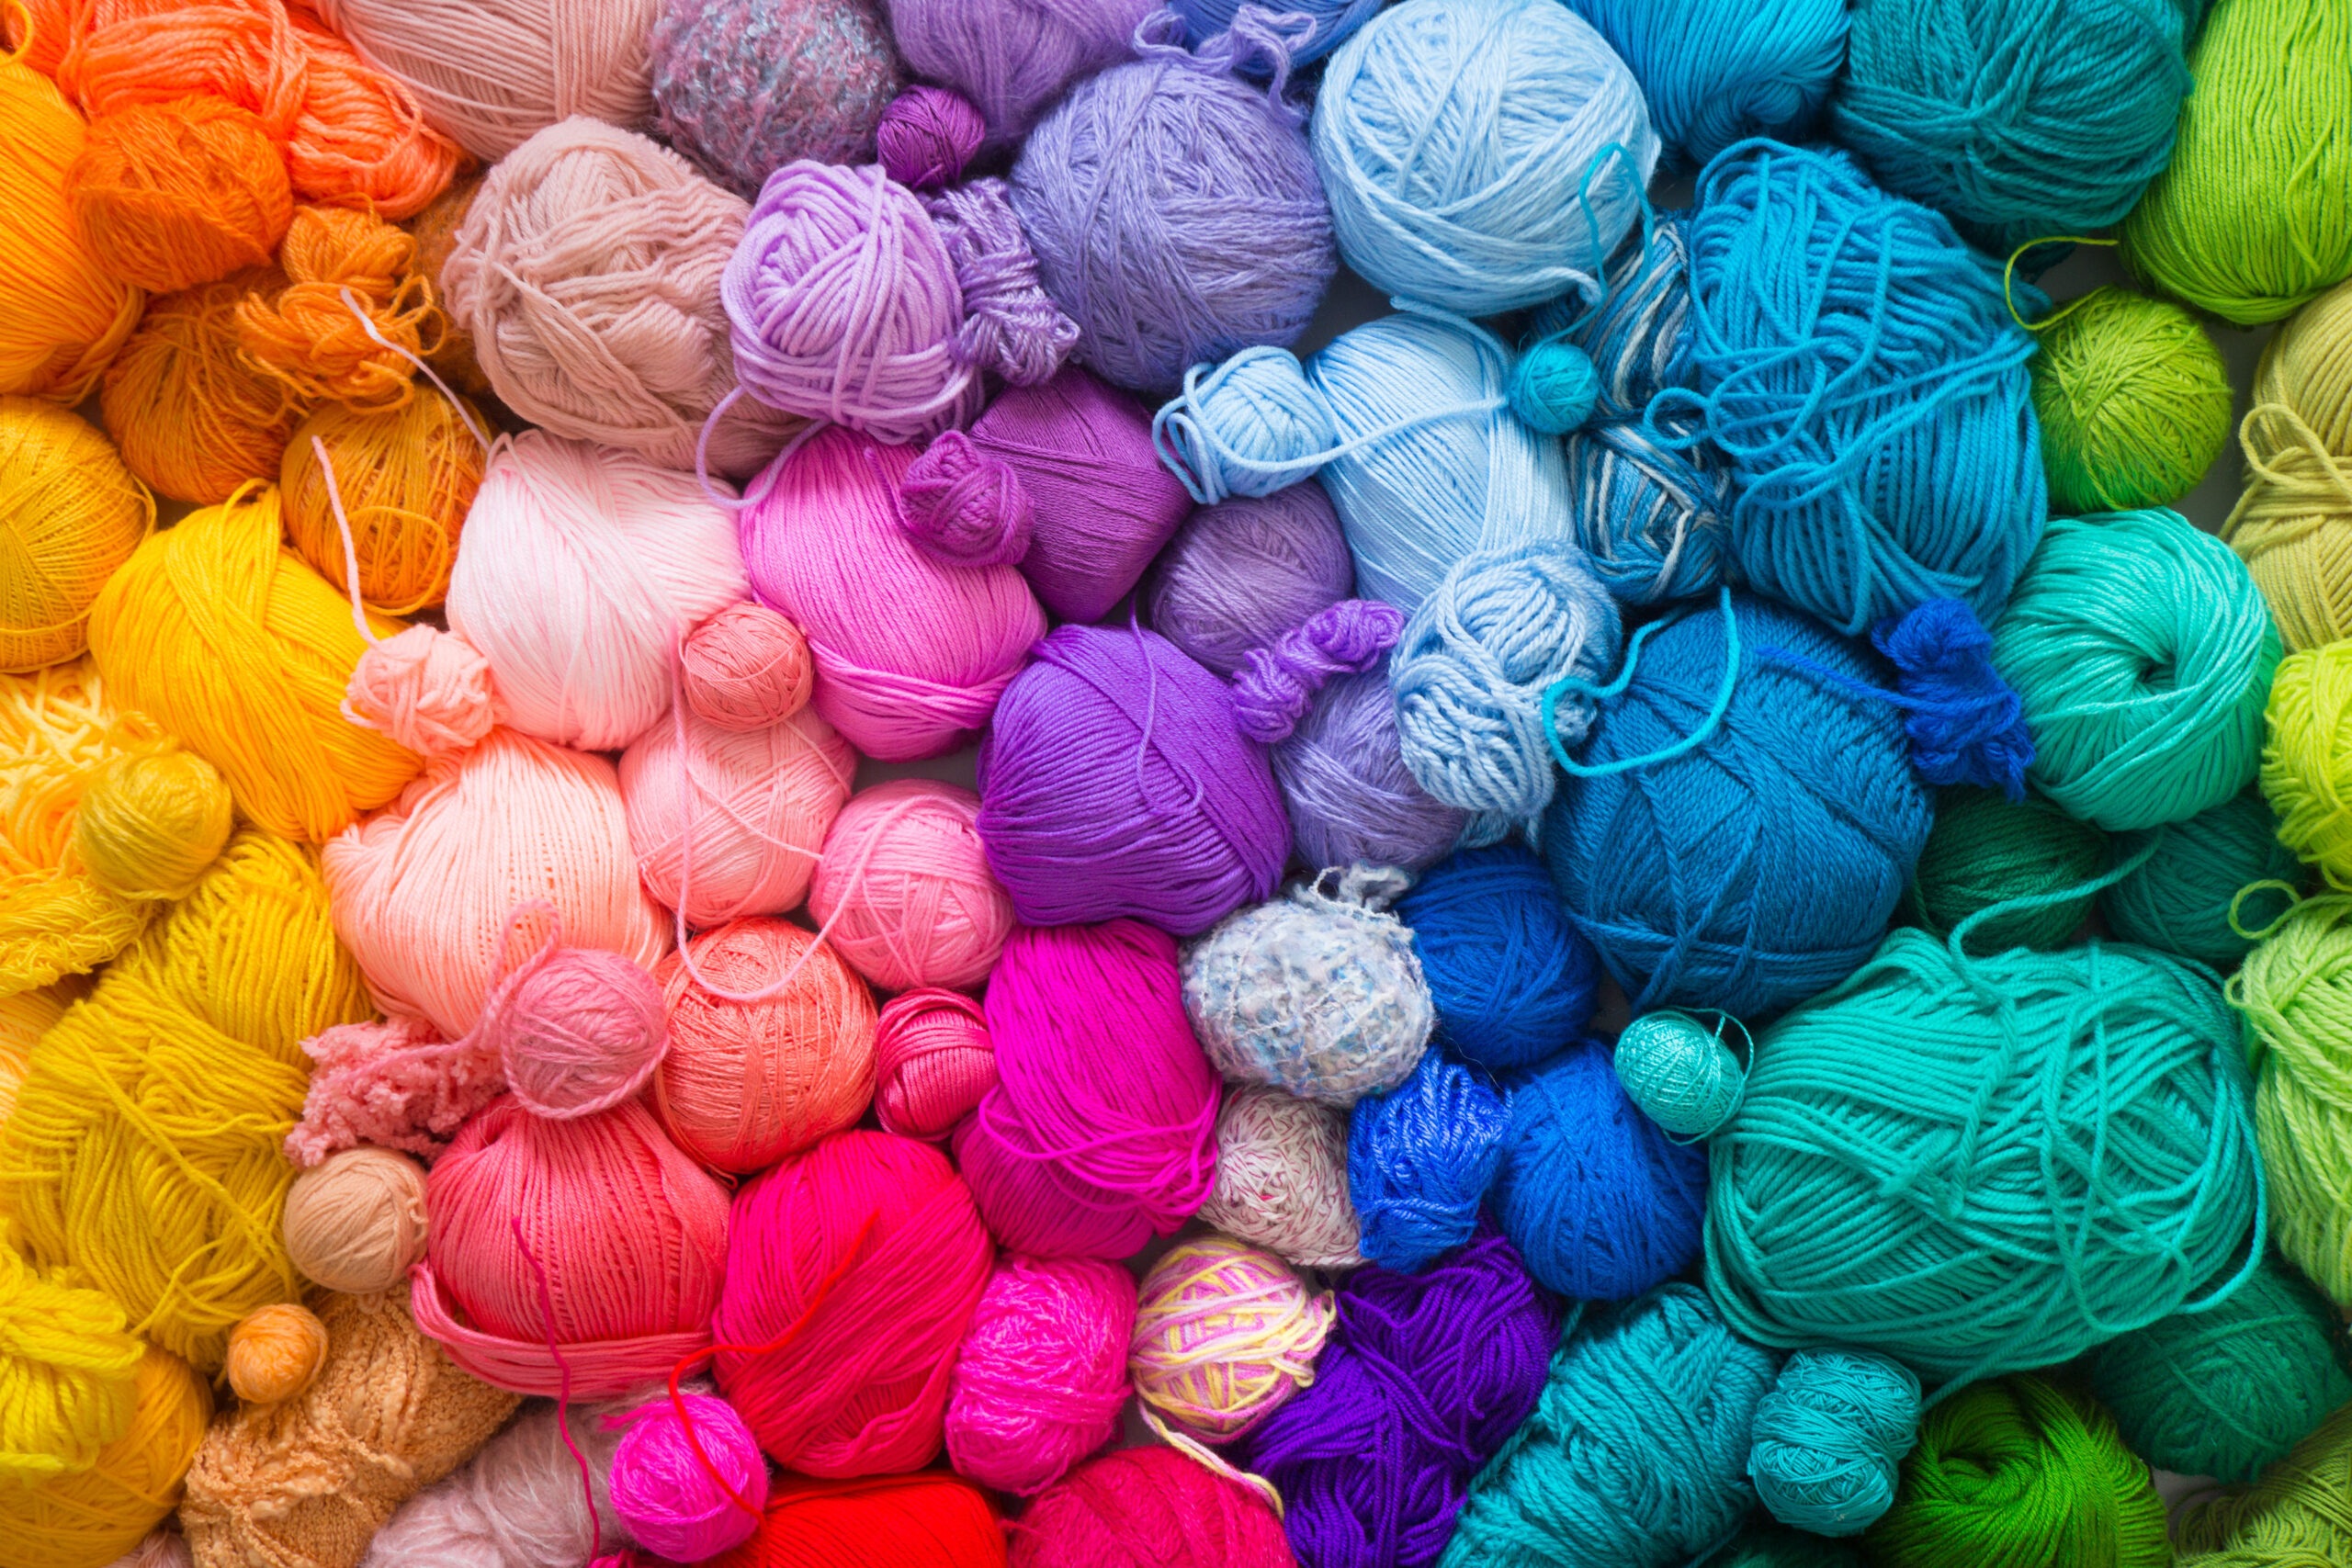 Colored balls of yarn